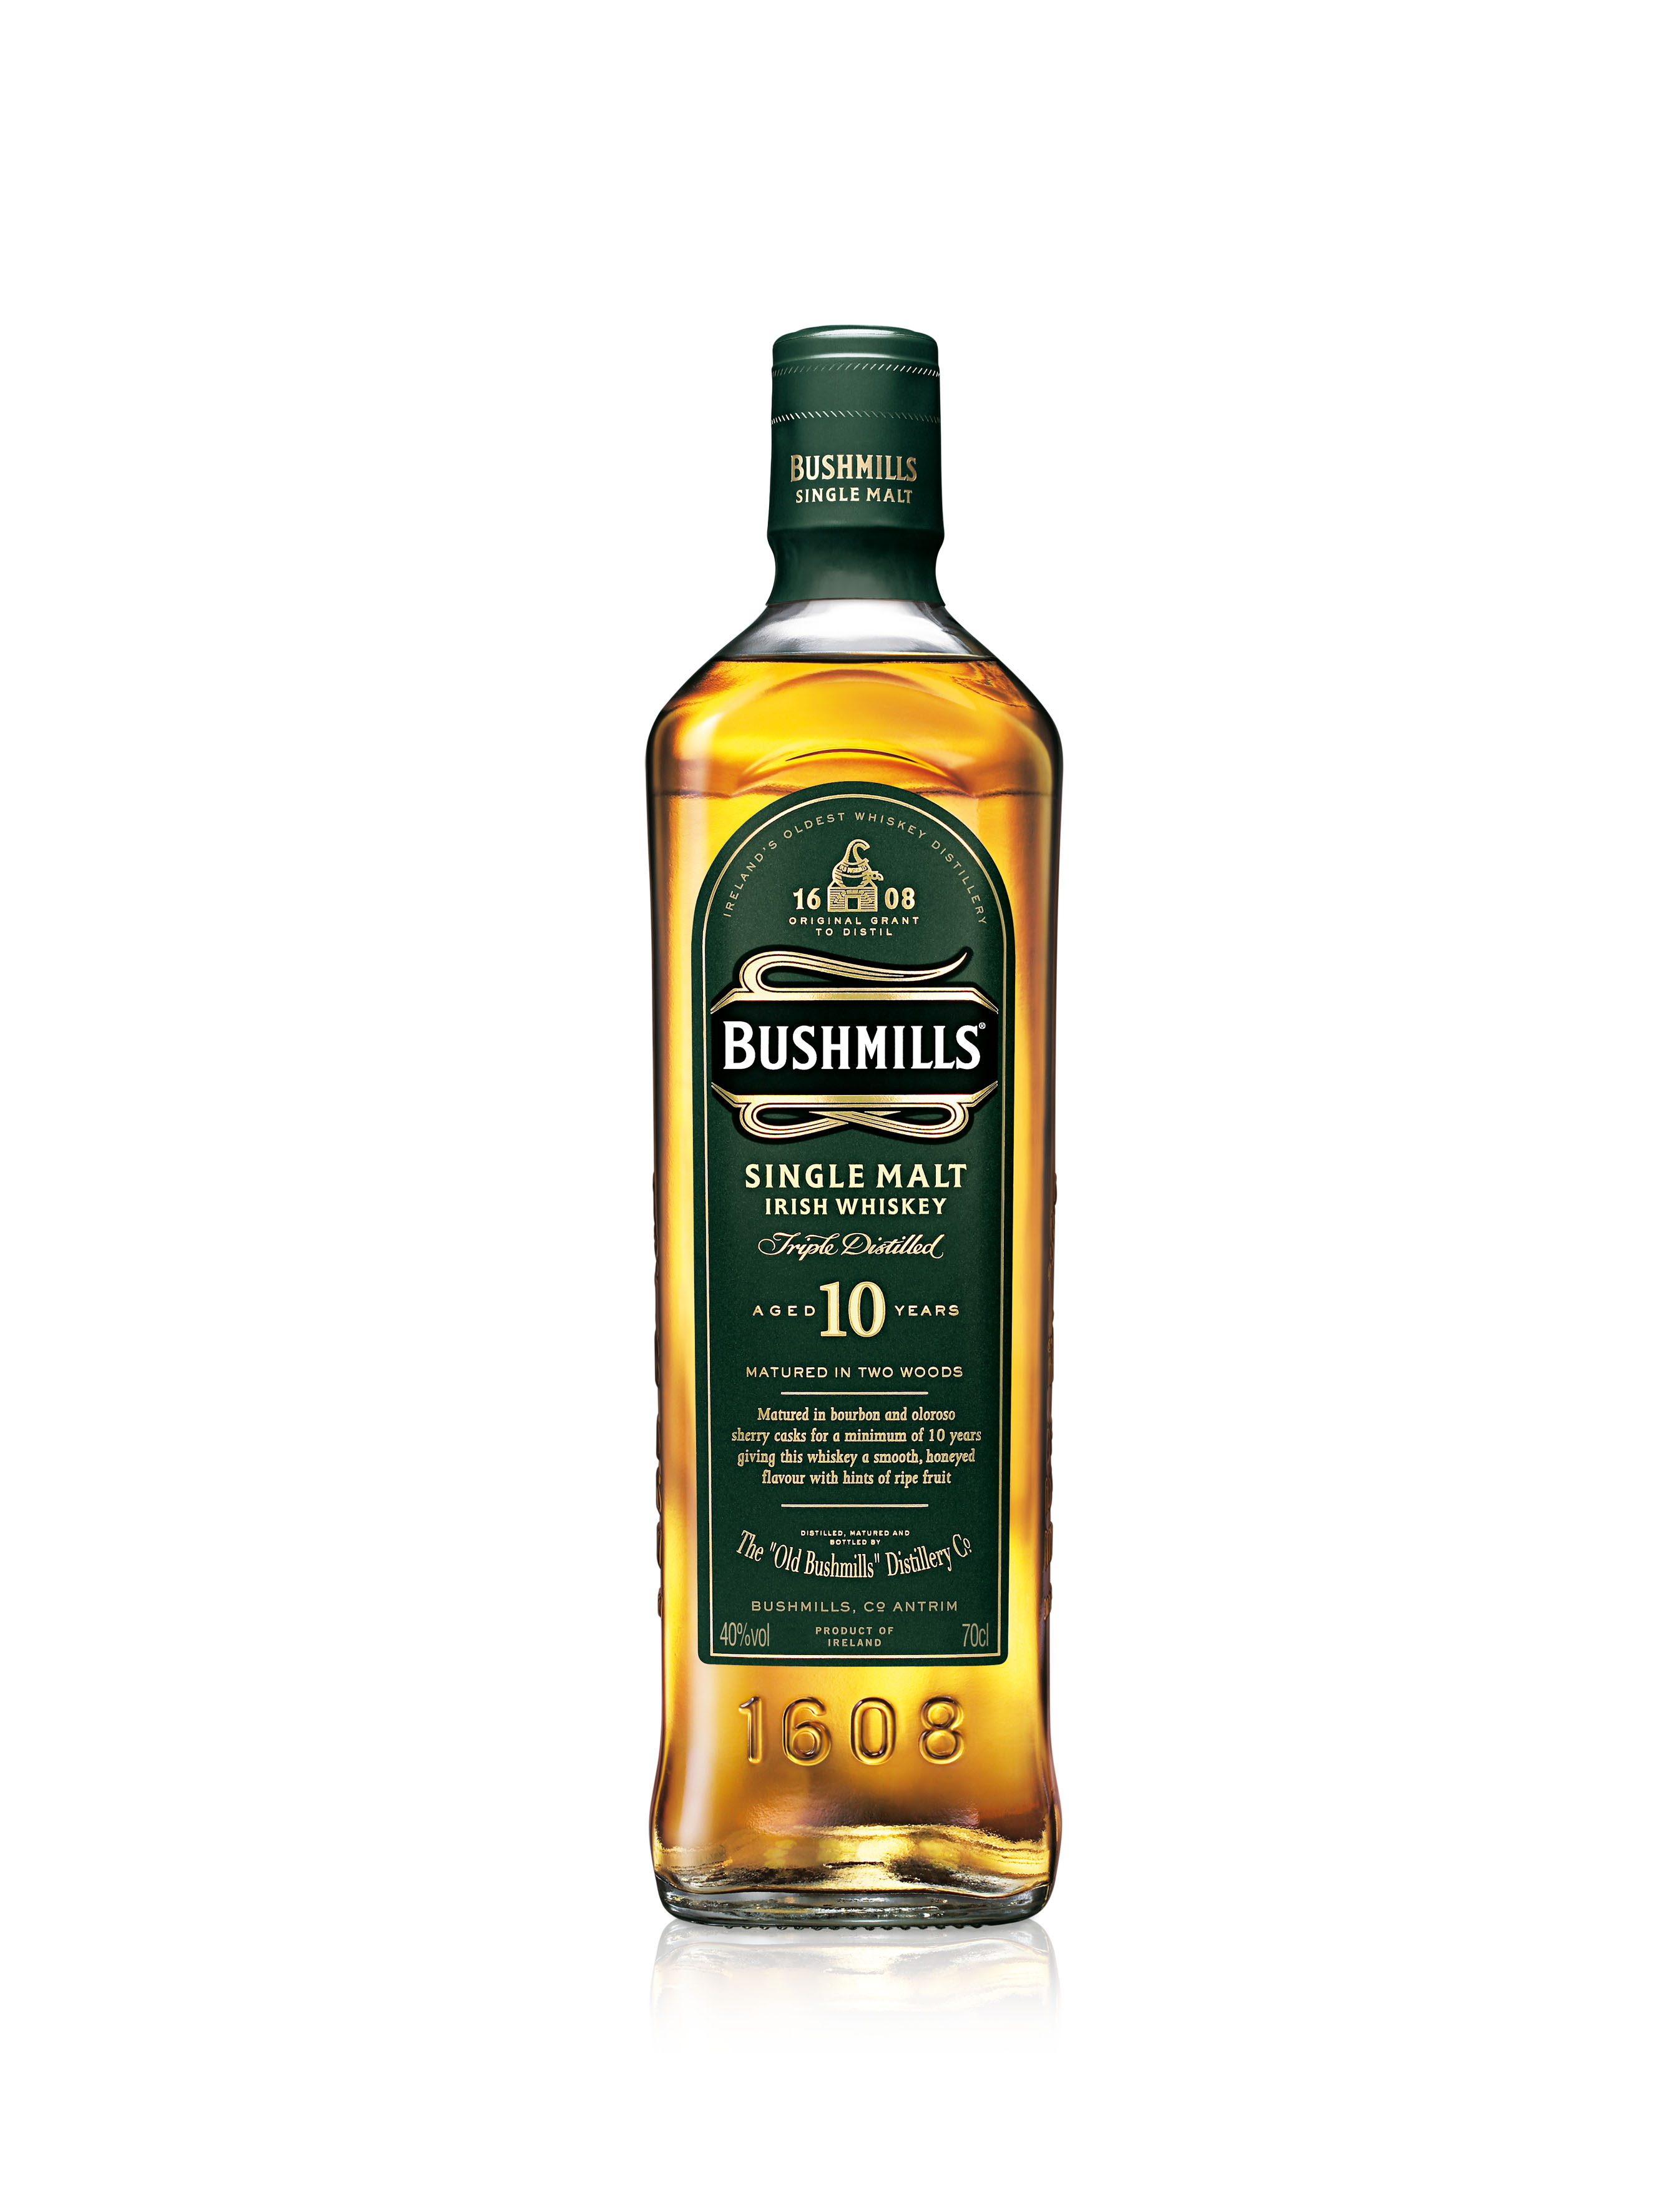 New look for Bushmills Irish whiskey